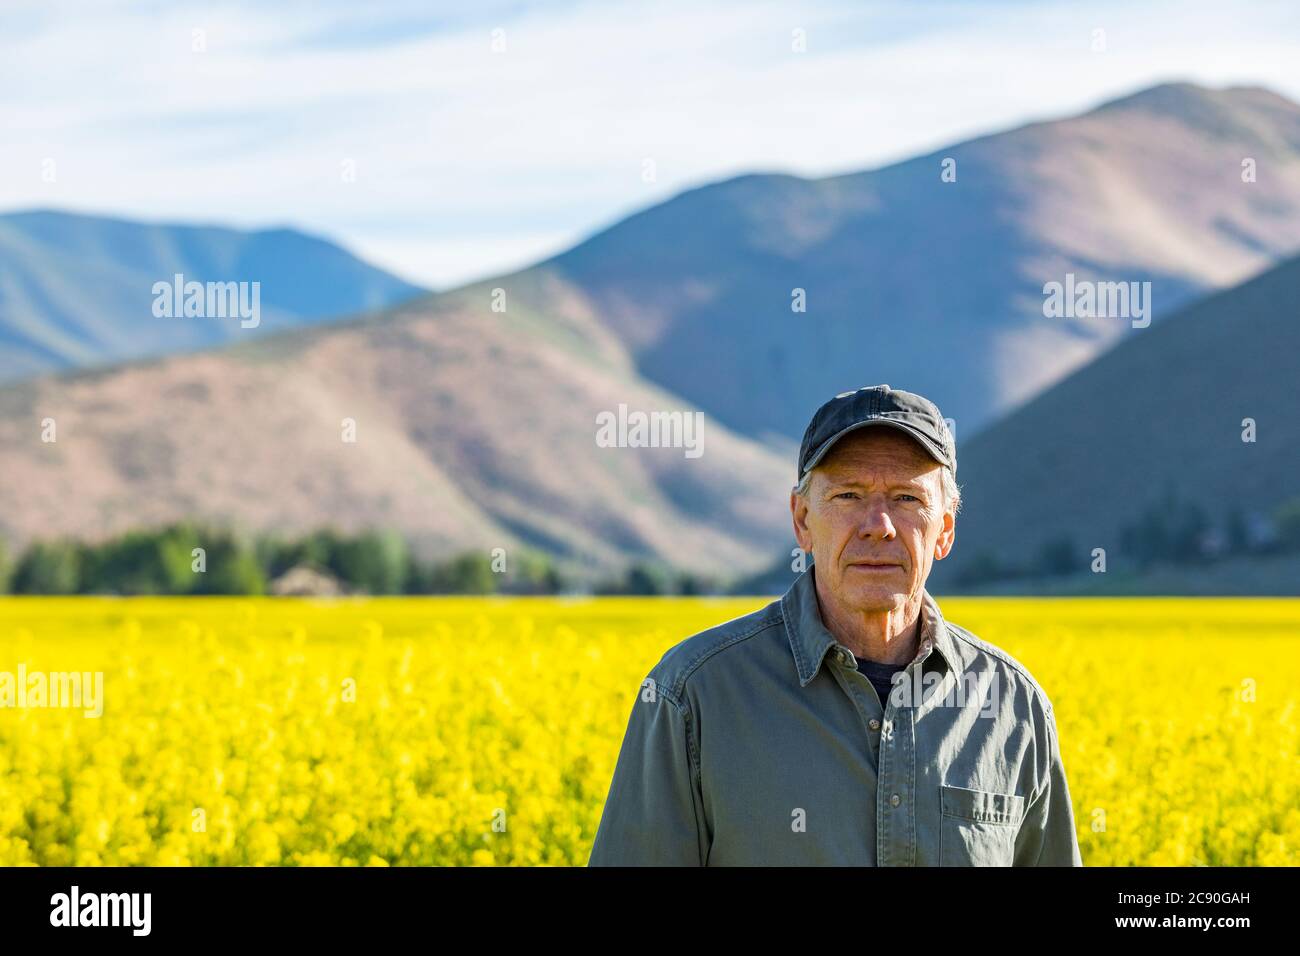 USA, Farmer standing in mustard field Stock Photo